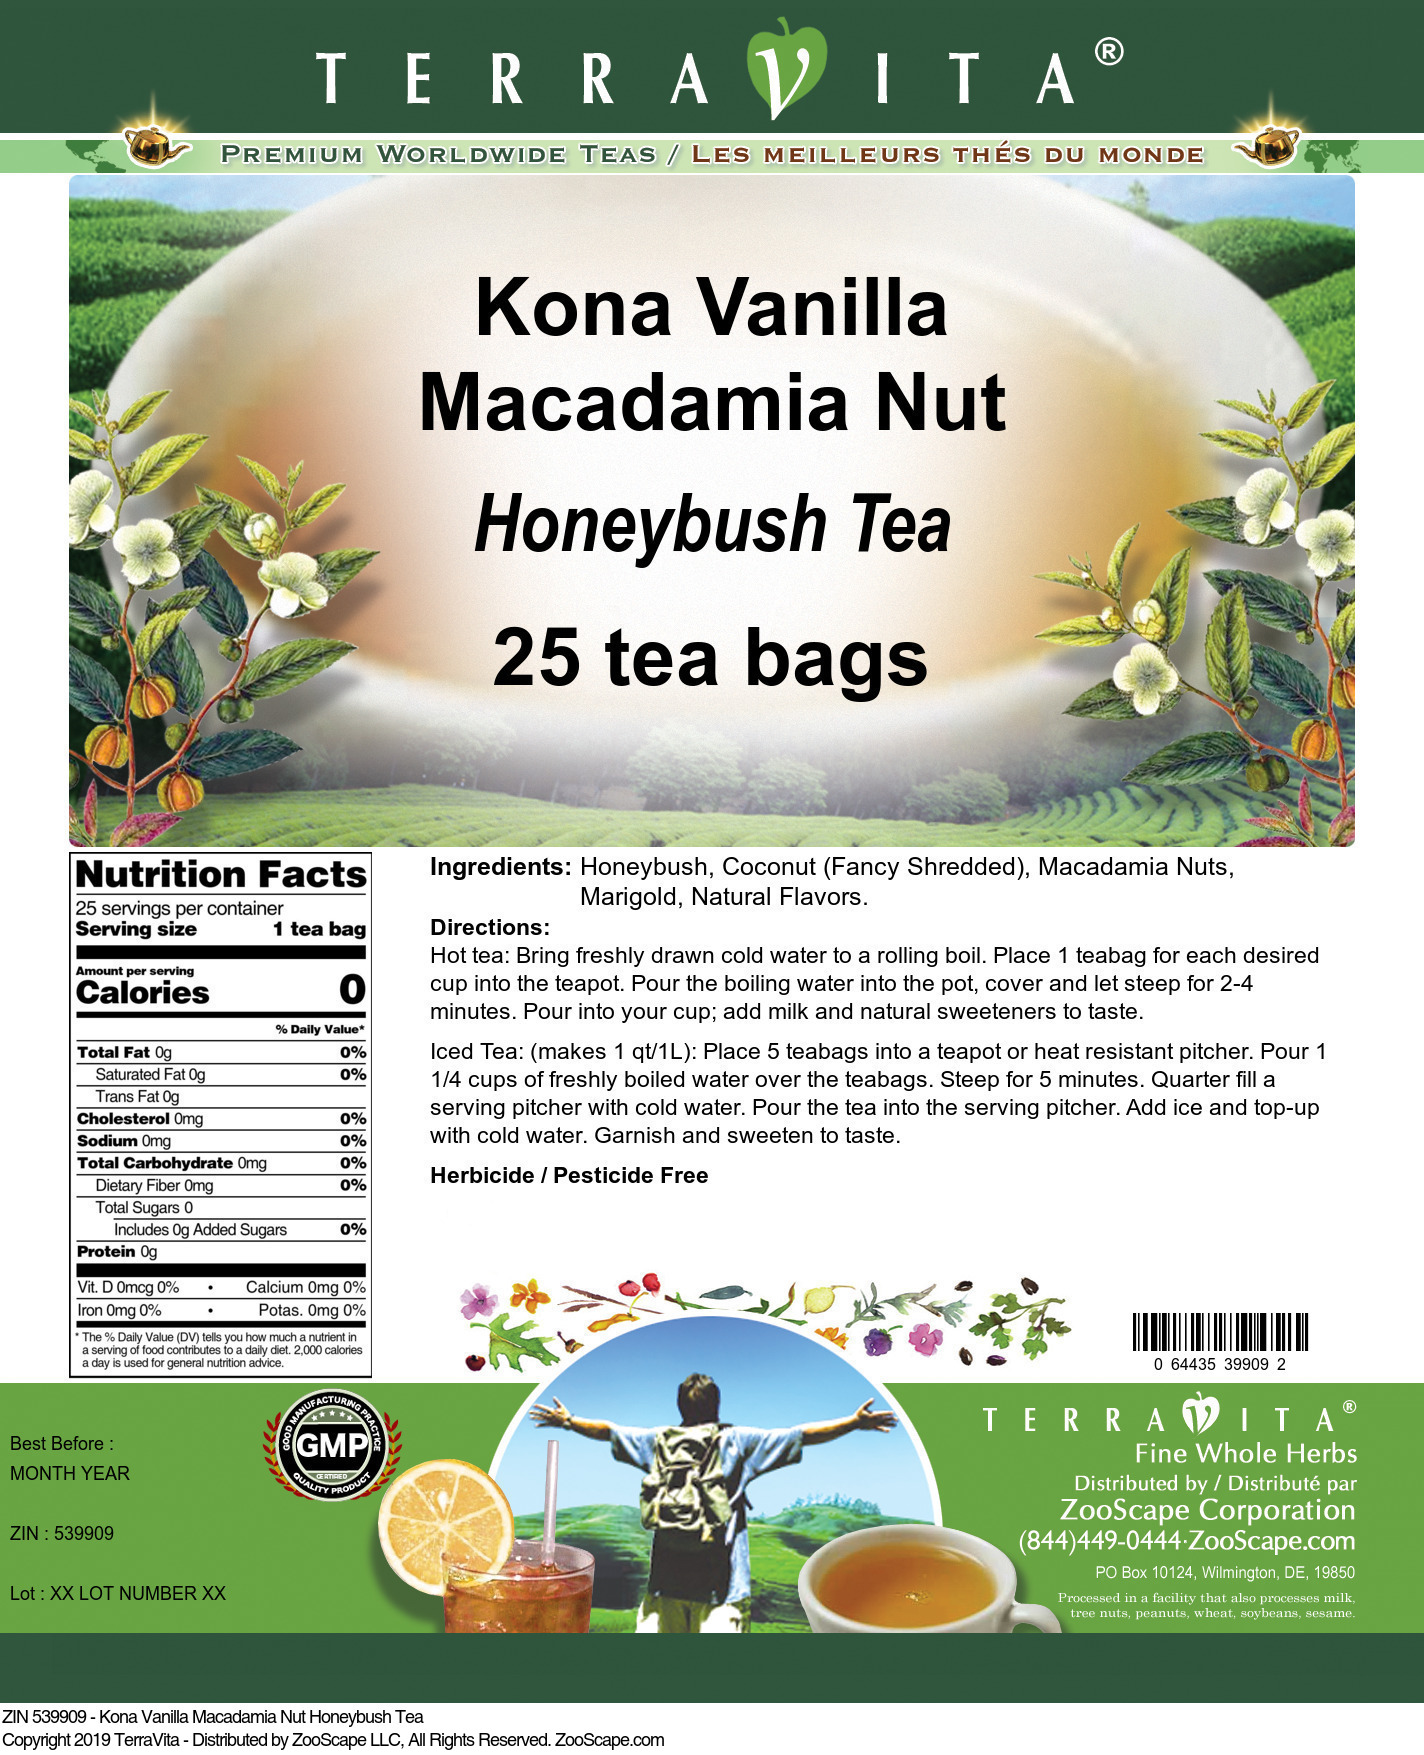 Kona Vanilla Macadamia Nut Honeybush Tea - Label